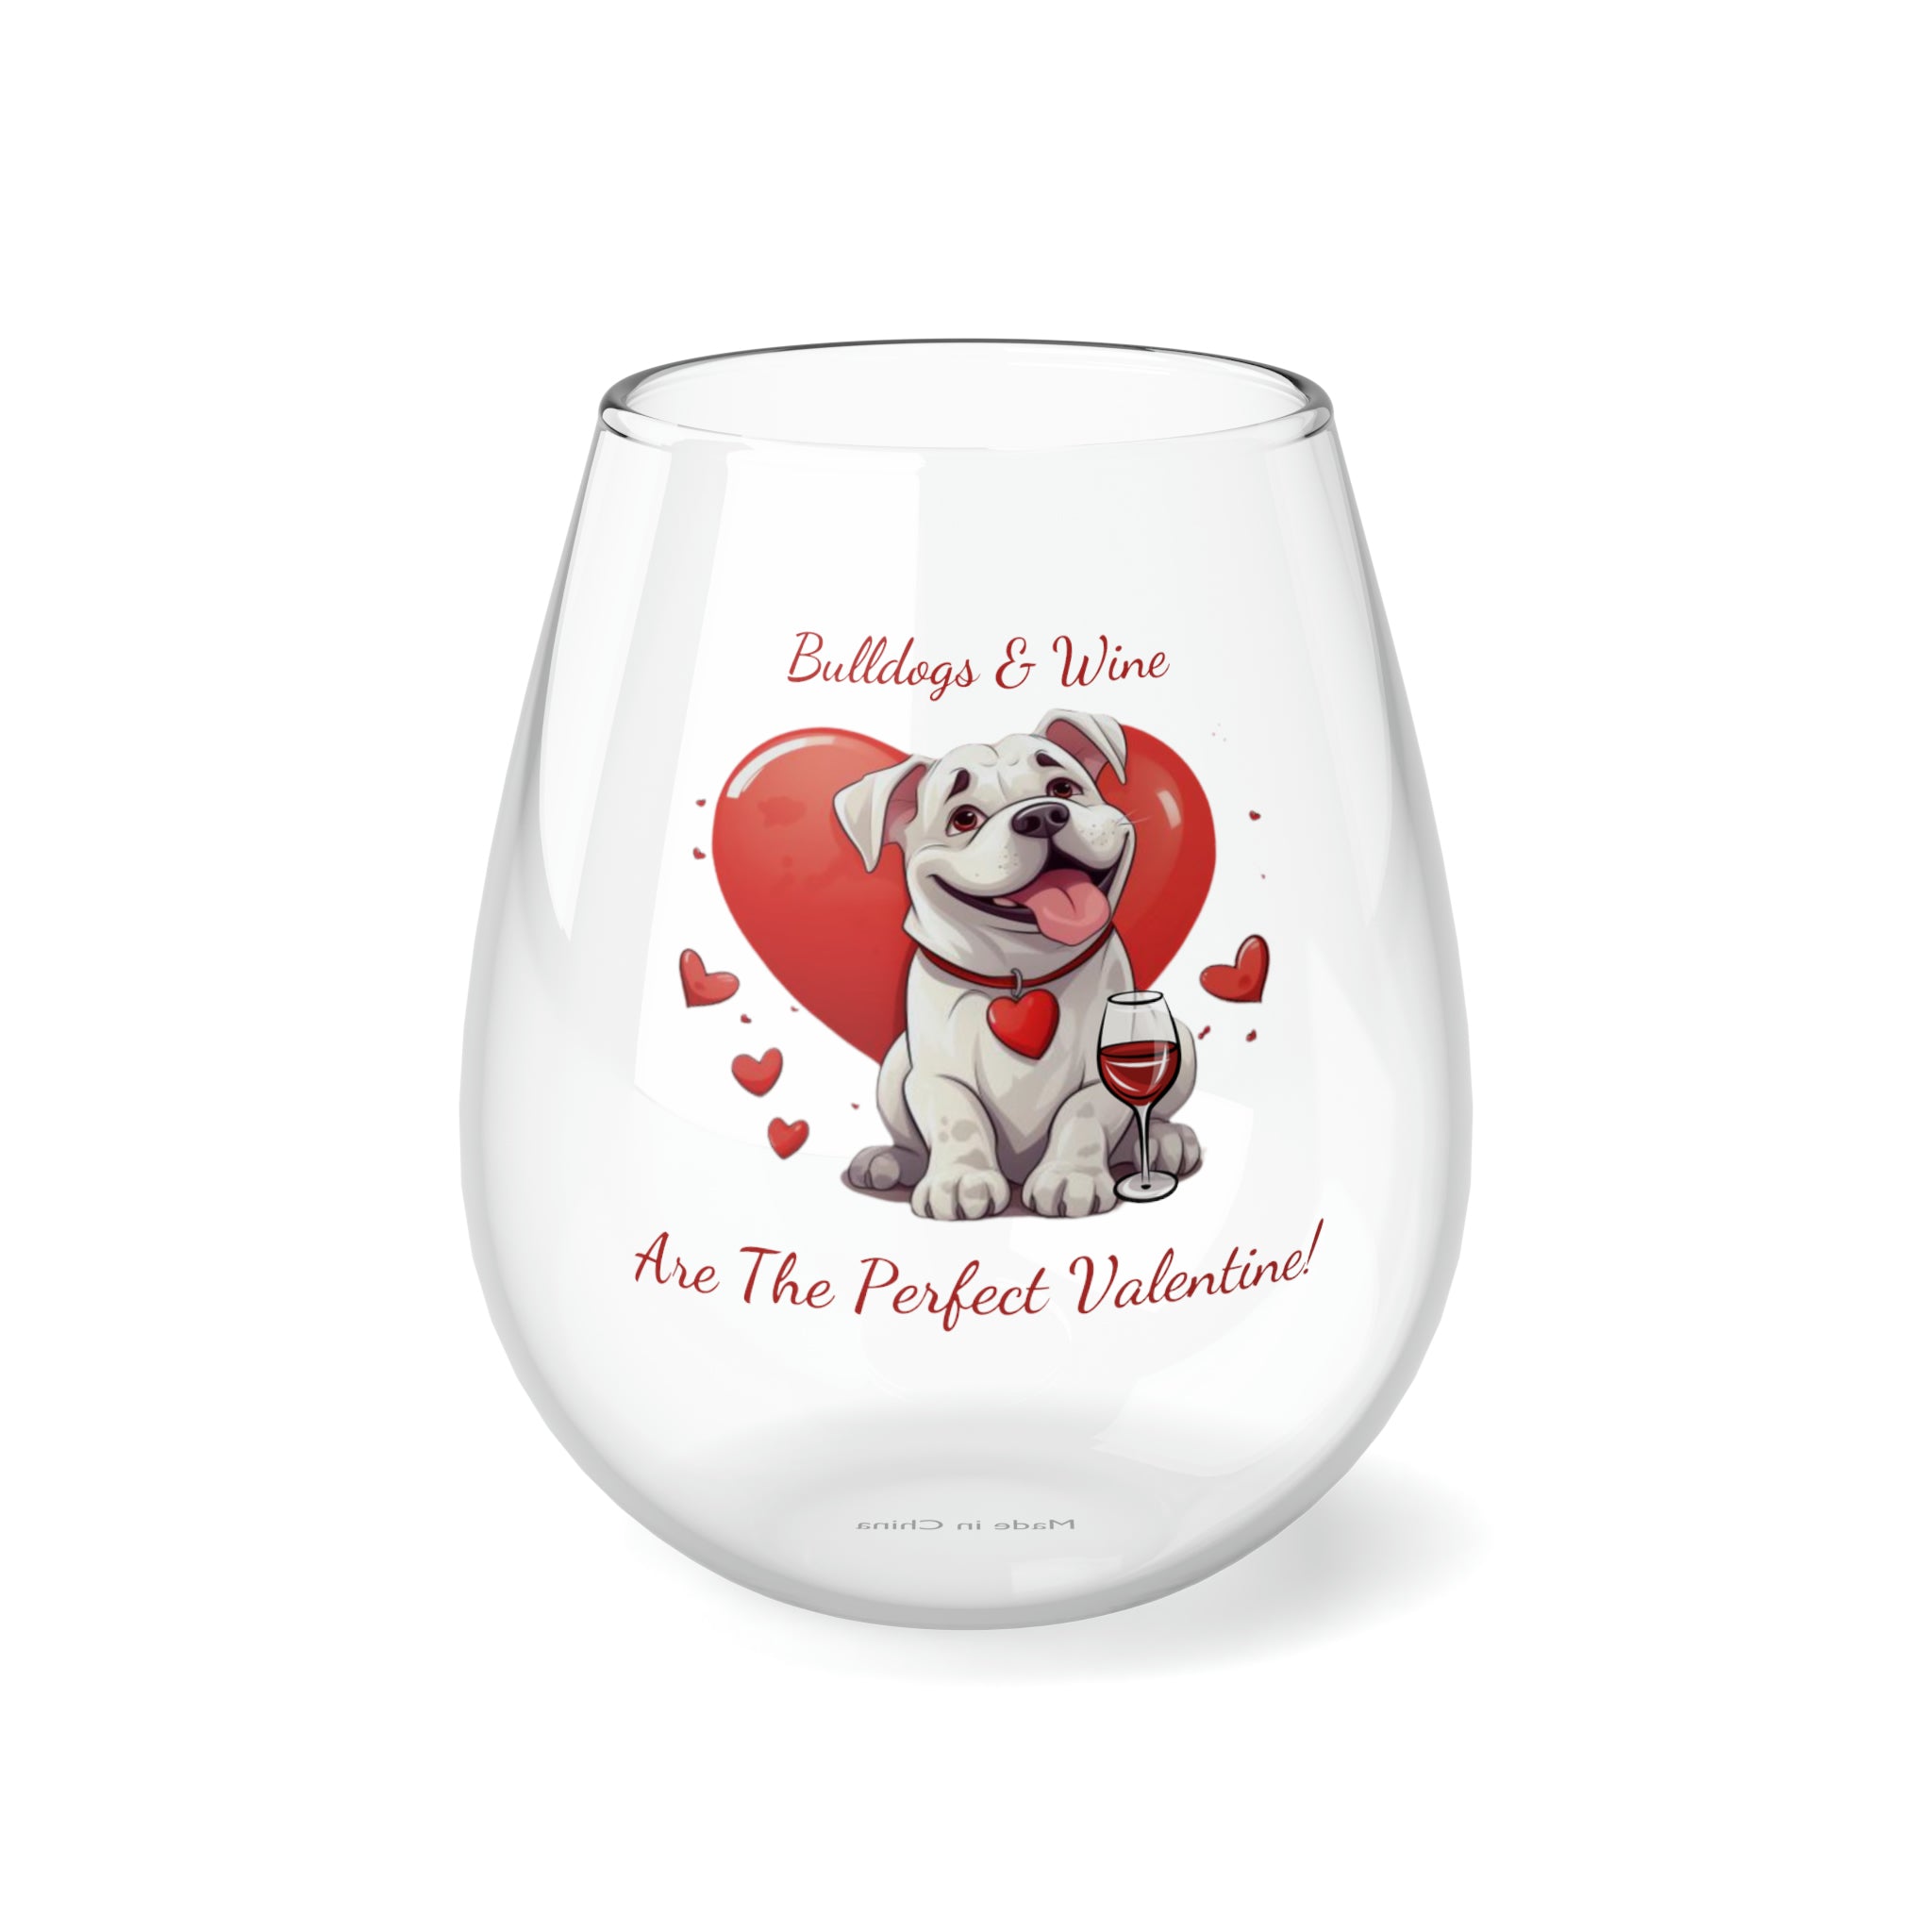 Bulldogs & Wine Are the Perfect Valentine! Stemless Wine Glass - English Bulldog